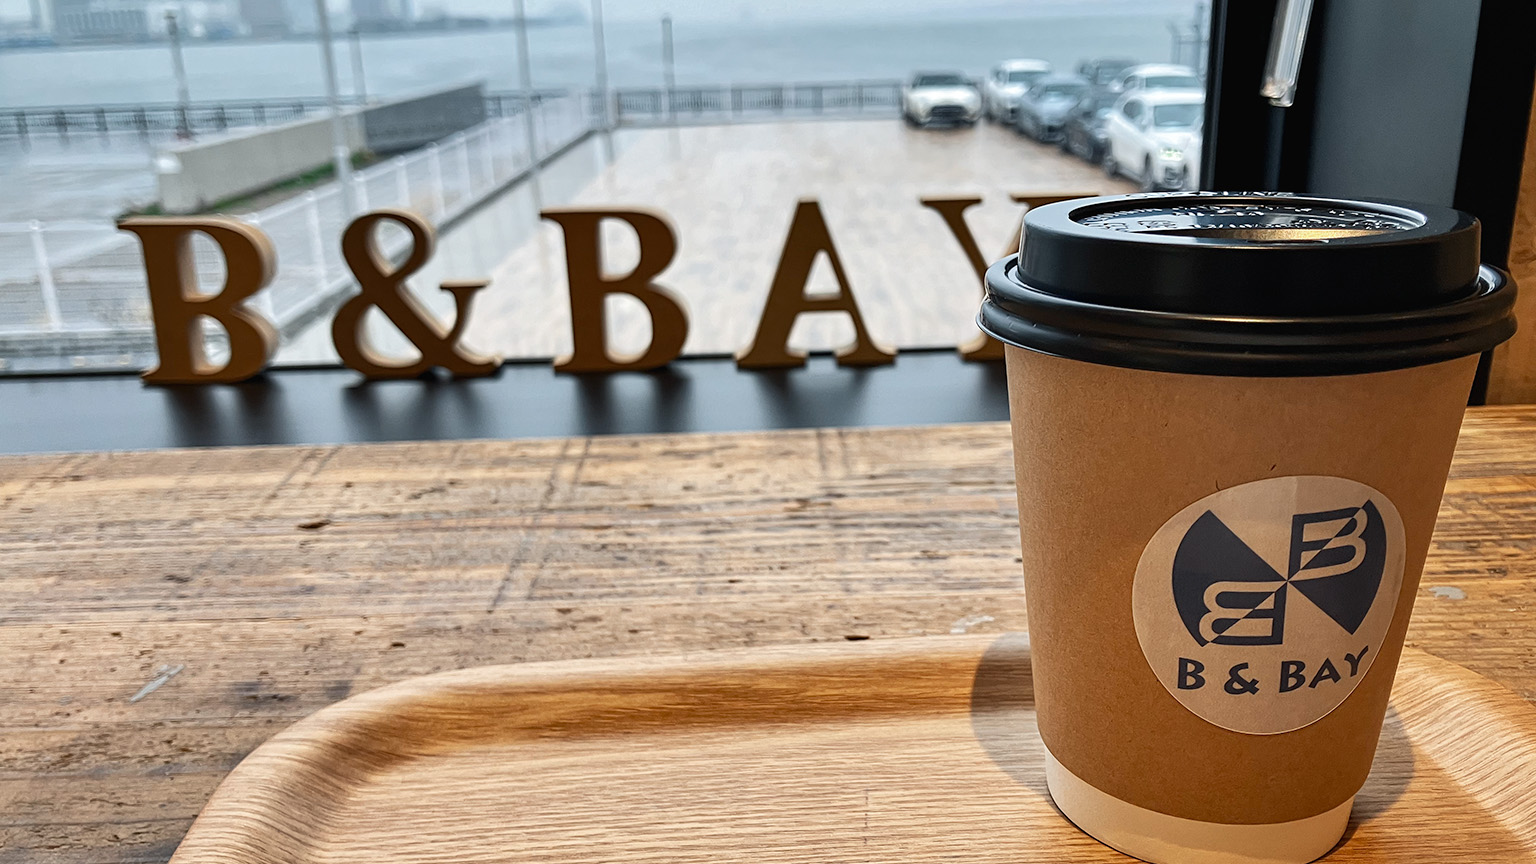 CAFE B&BAY のカフェラテの写真